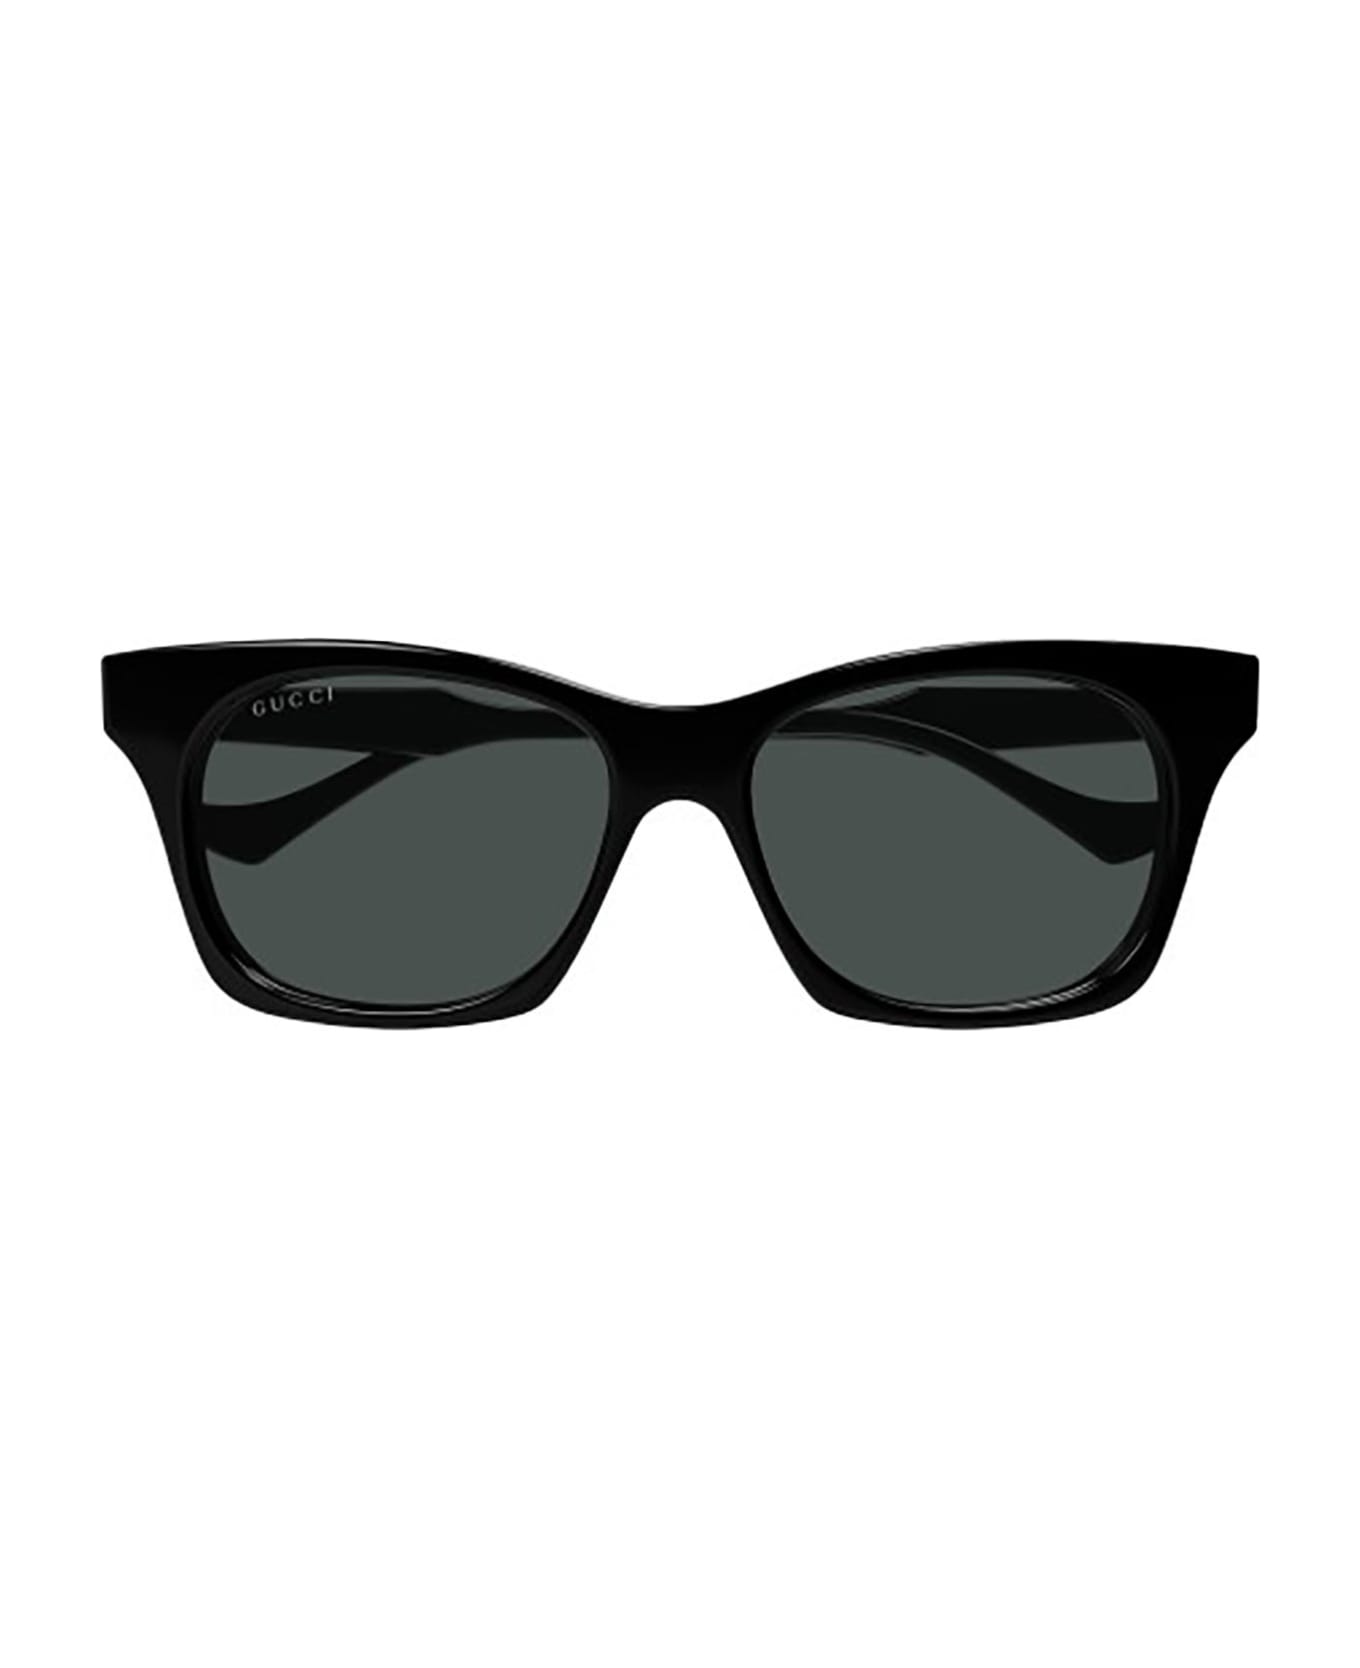 Gucci Eyewear Gg1299s Sunglasses - 001 black black grey サングラス